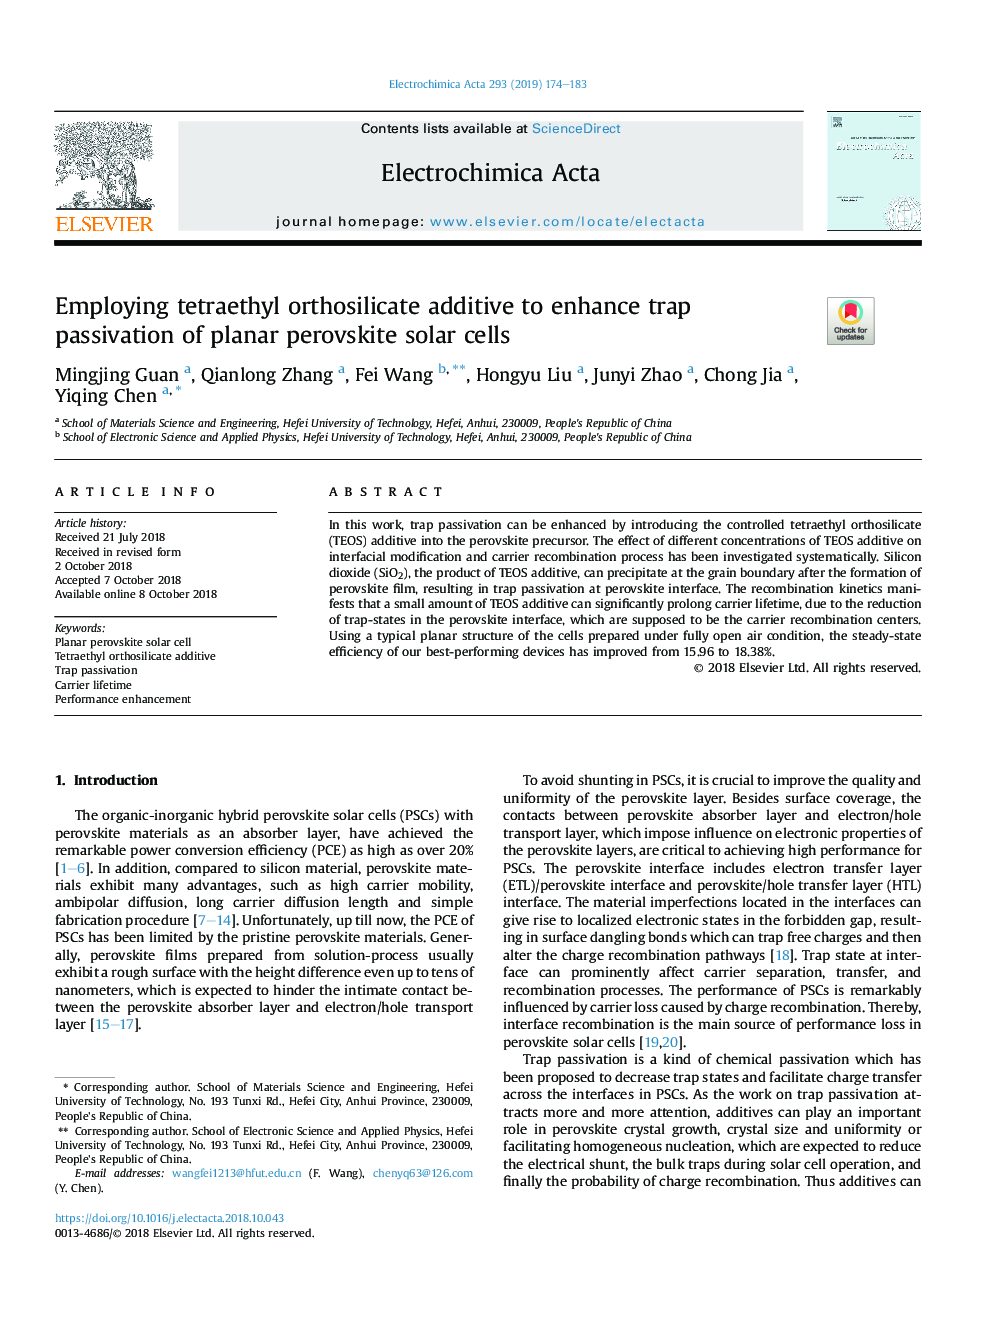 Employing tetraethyl orthosilicate additive to enhance trap passivation of planar perovskite solar cells